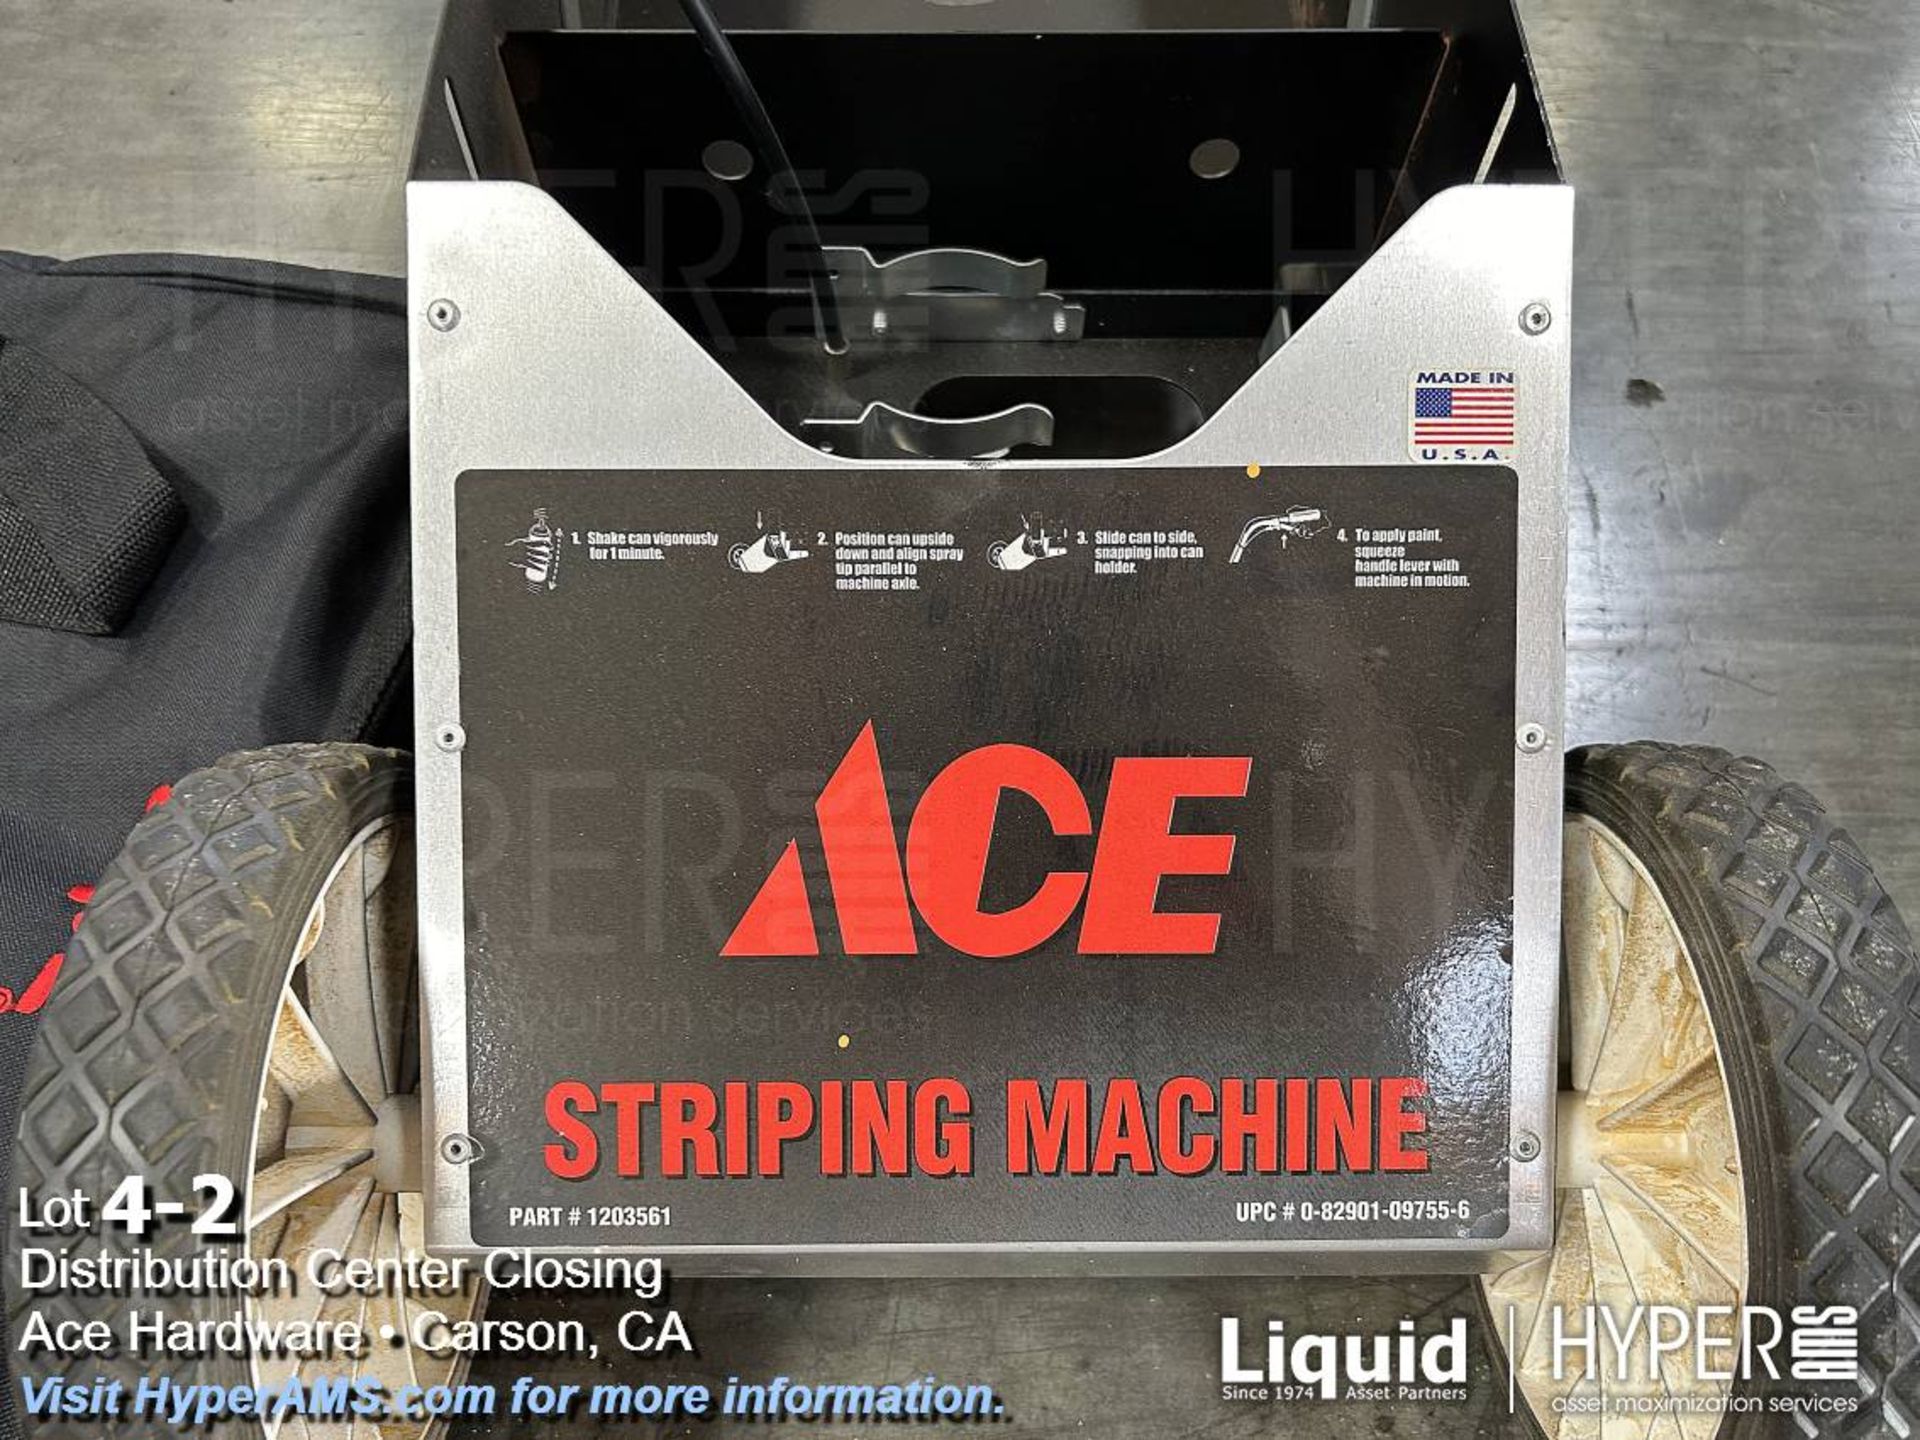 Ace Striping machine - Image 2 of 2